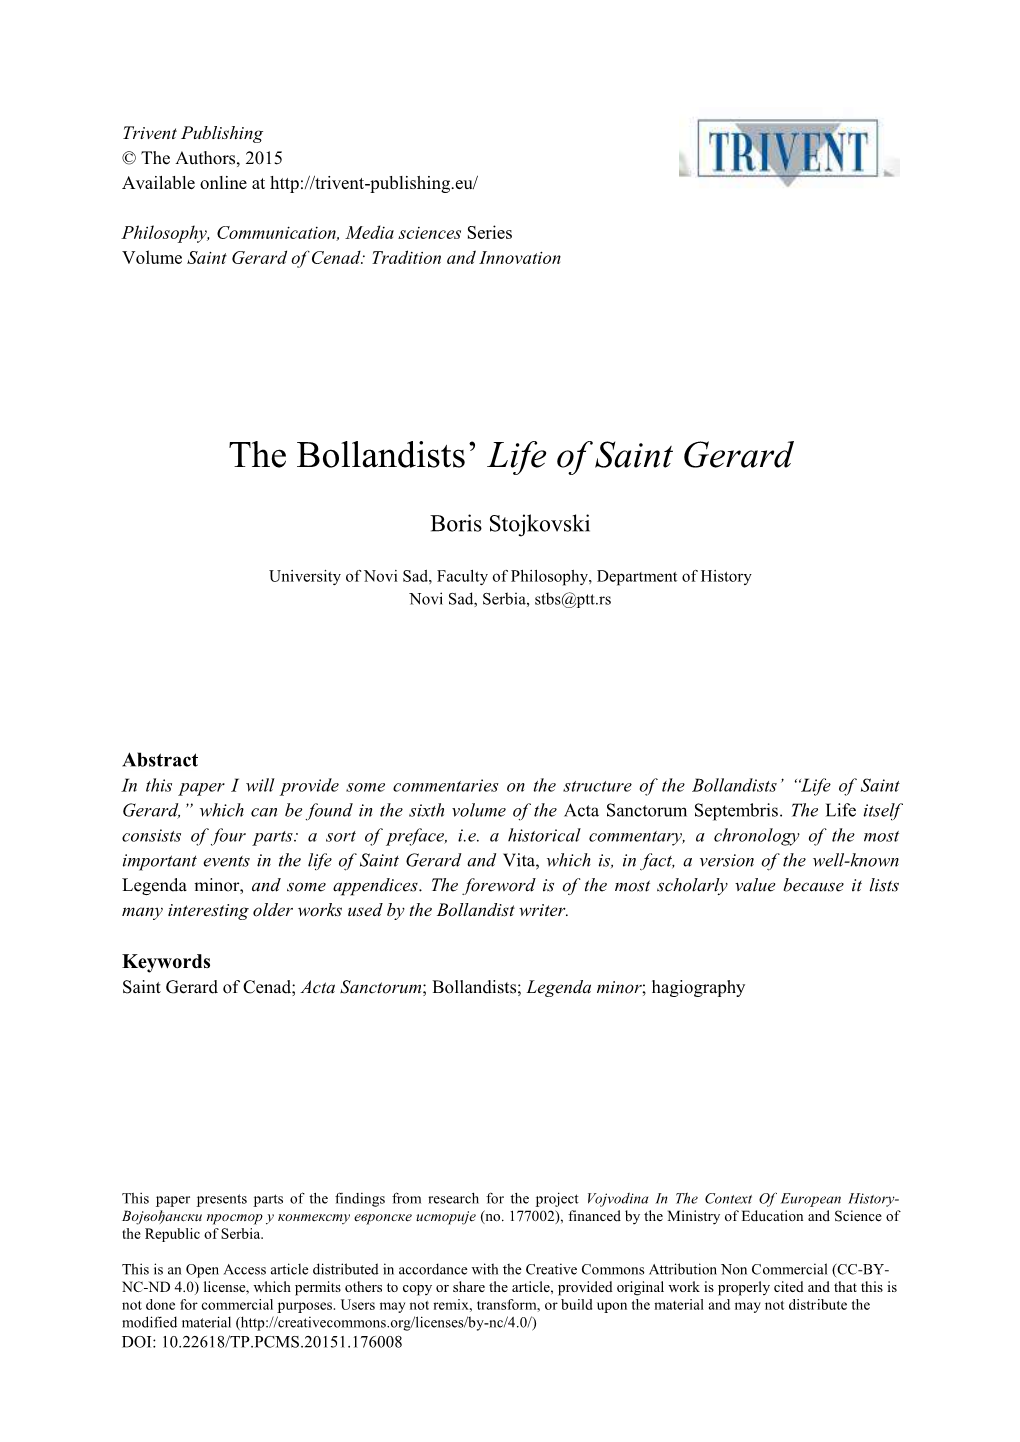 The Bollandists' Life of Saint Gerard